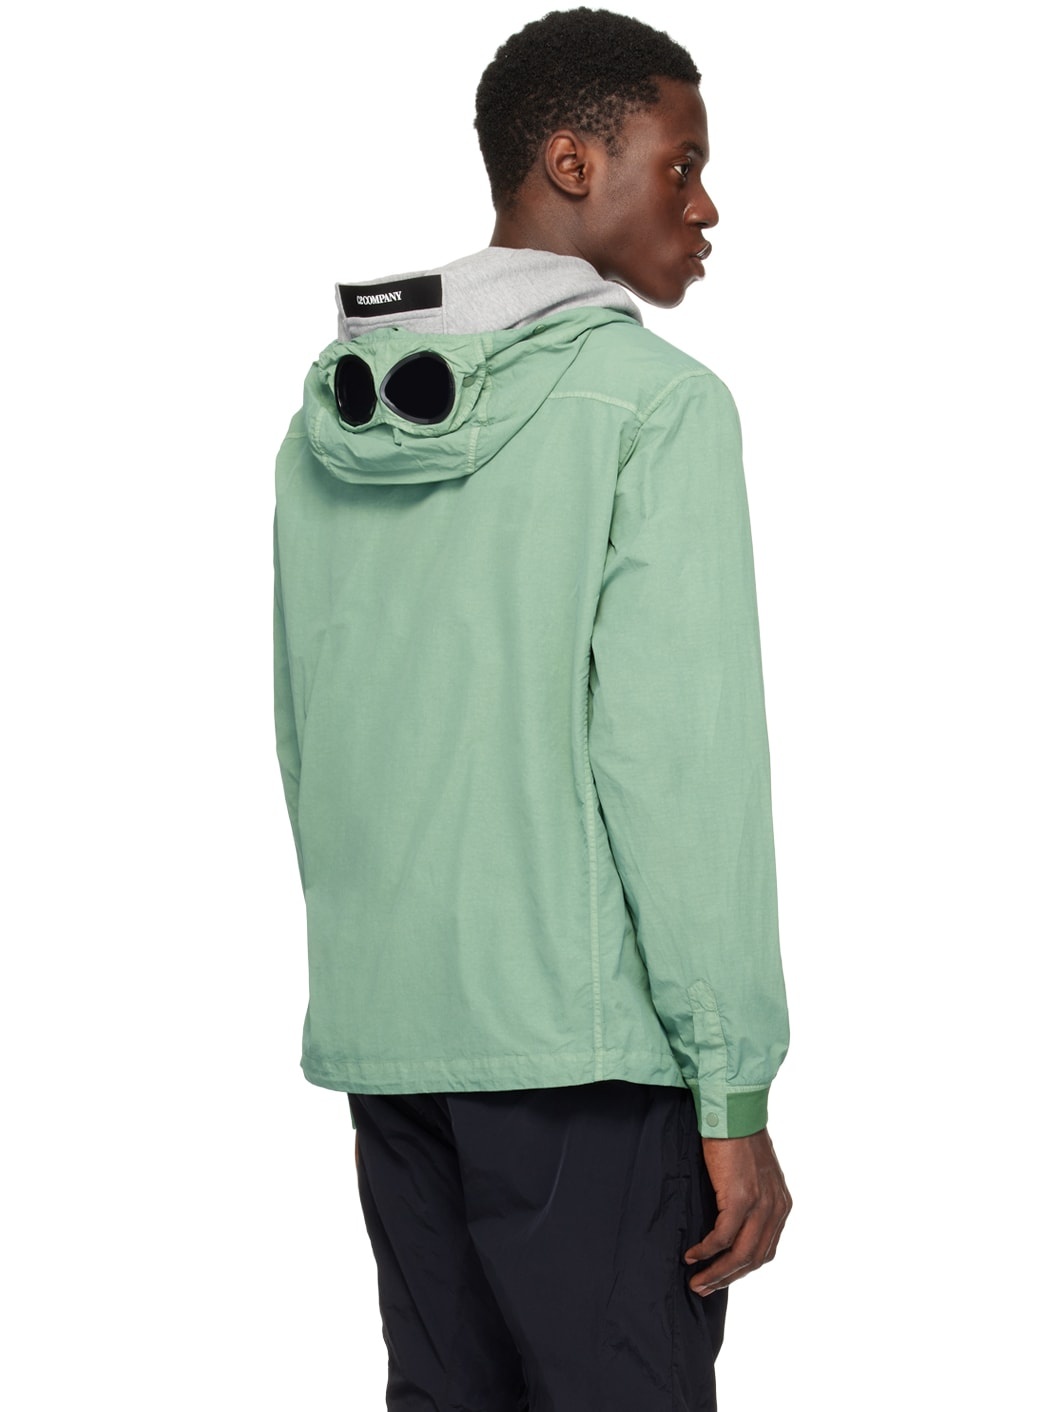 Green Goggle Jacket - 3